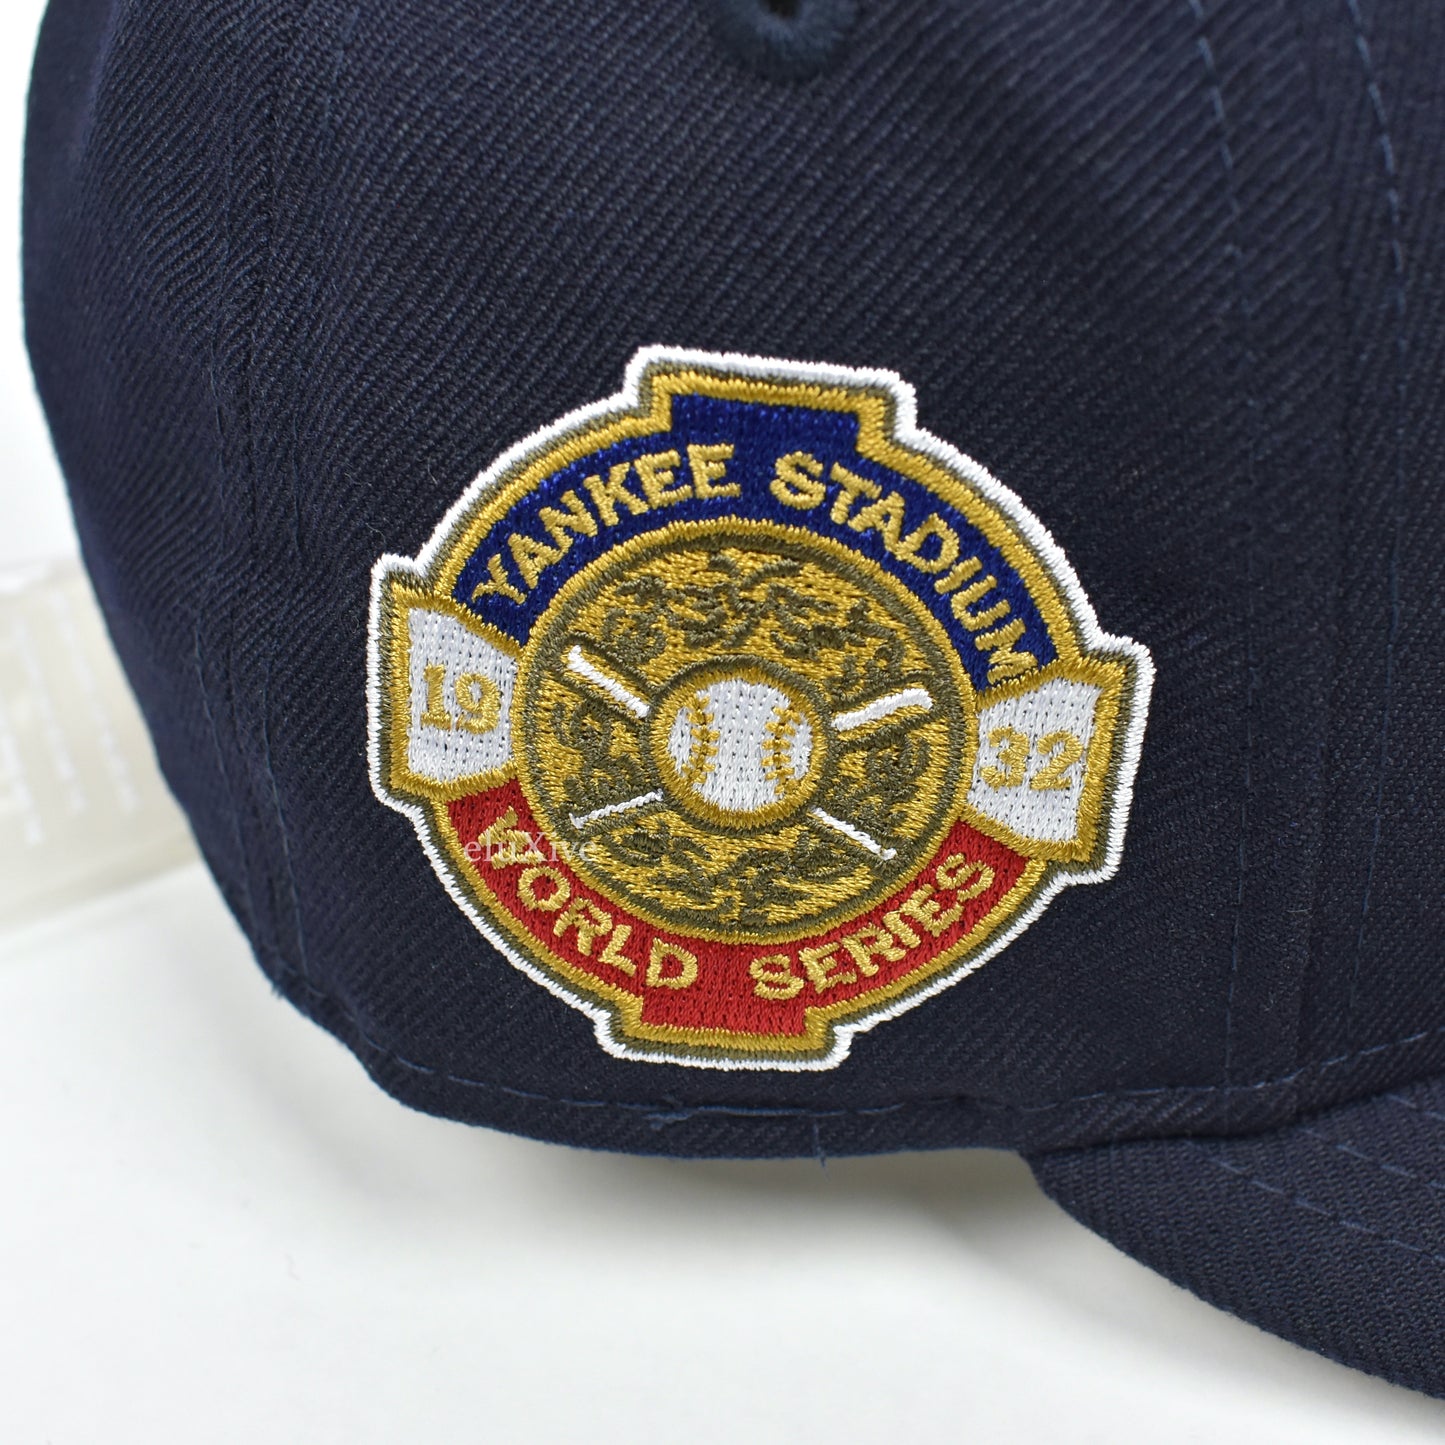 Kith x New Era - New York Yankees 1932 World Series Logo Hat